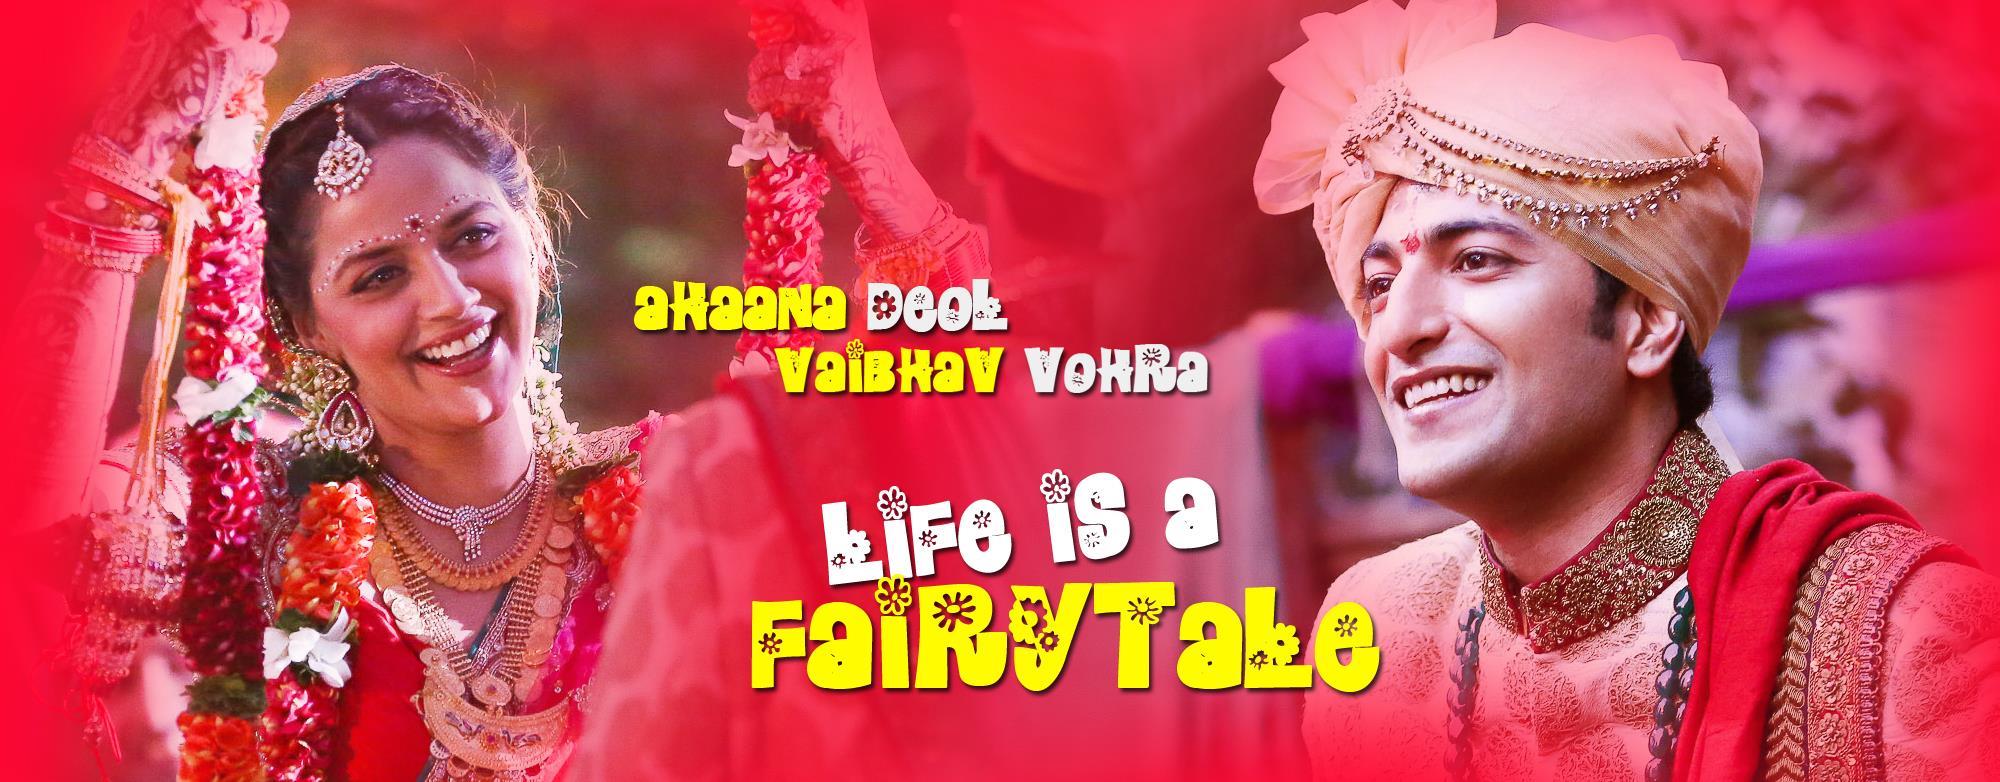 Bollywood Celebrity Wedding Film of Ahana Deol and Vaibhav Vohra